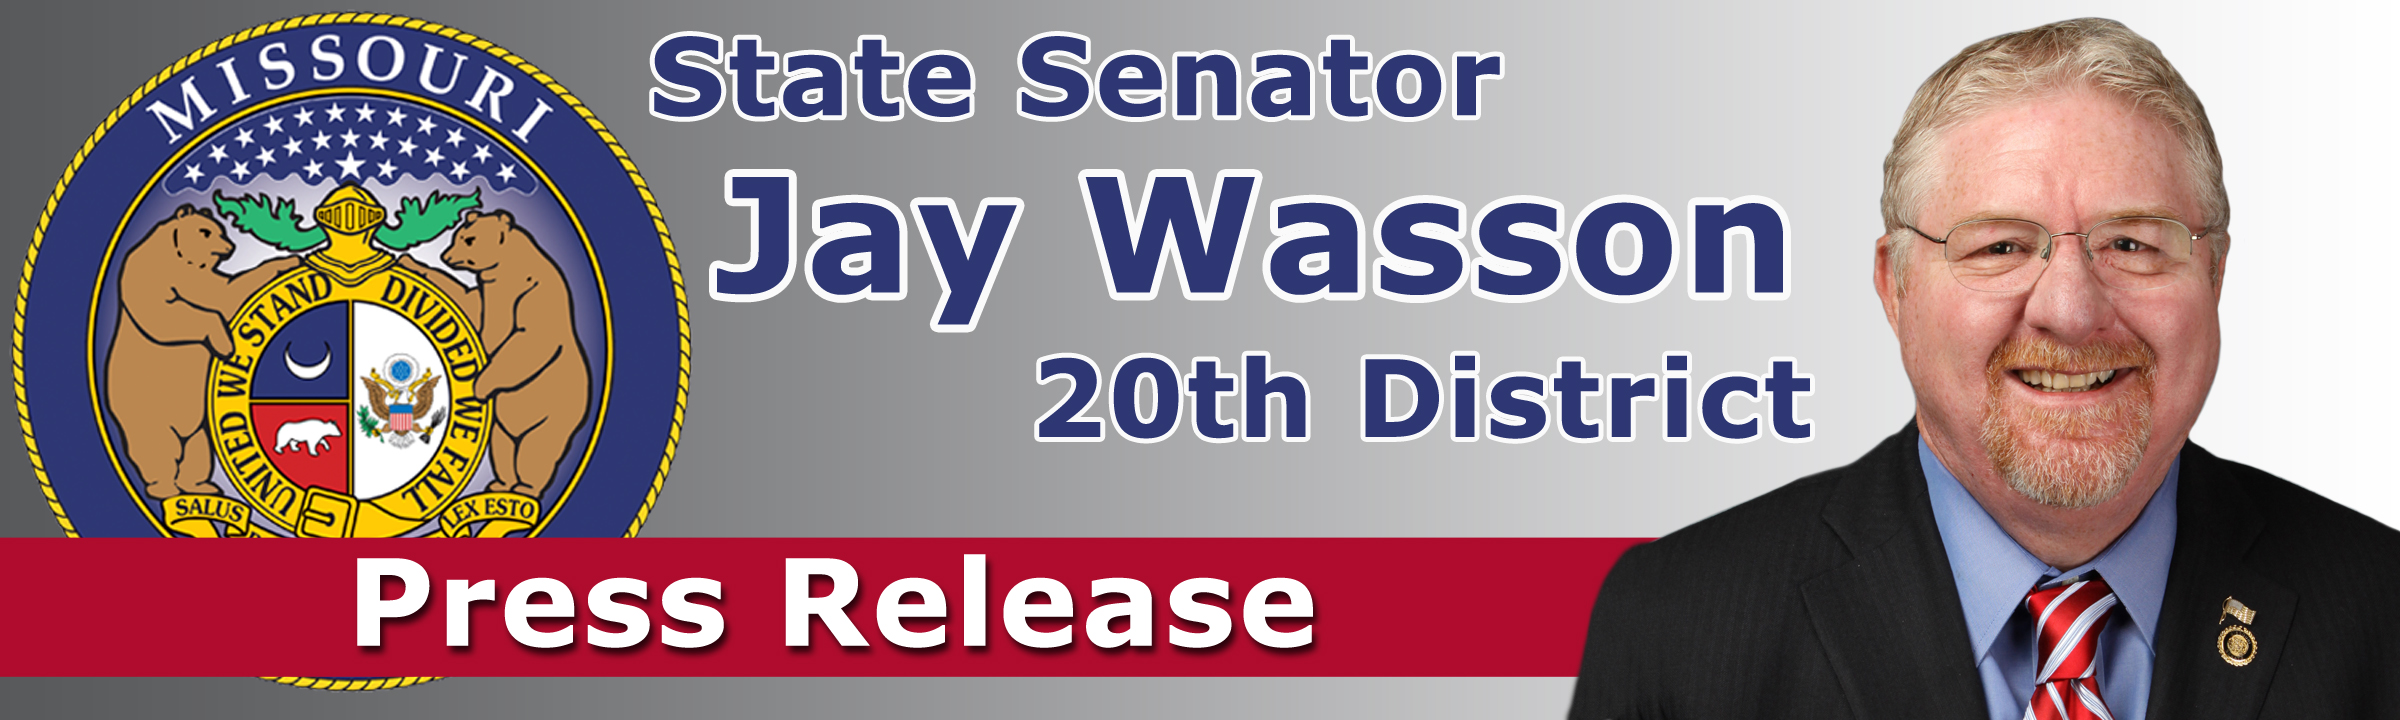 Wasson - Press Release Banner - 020212